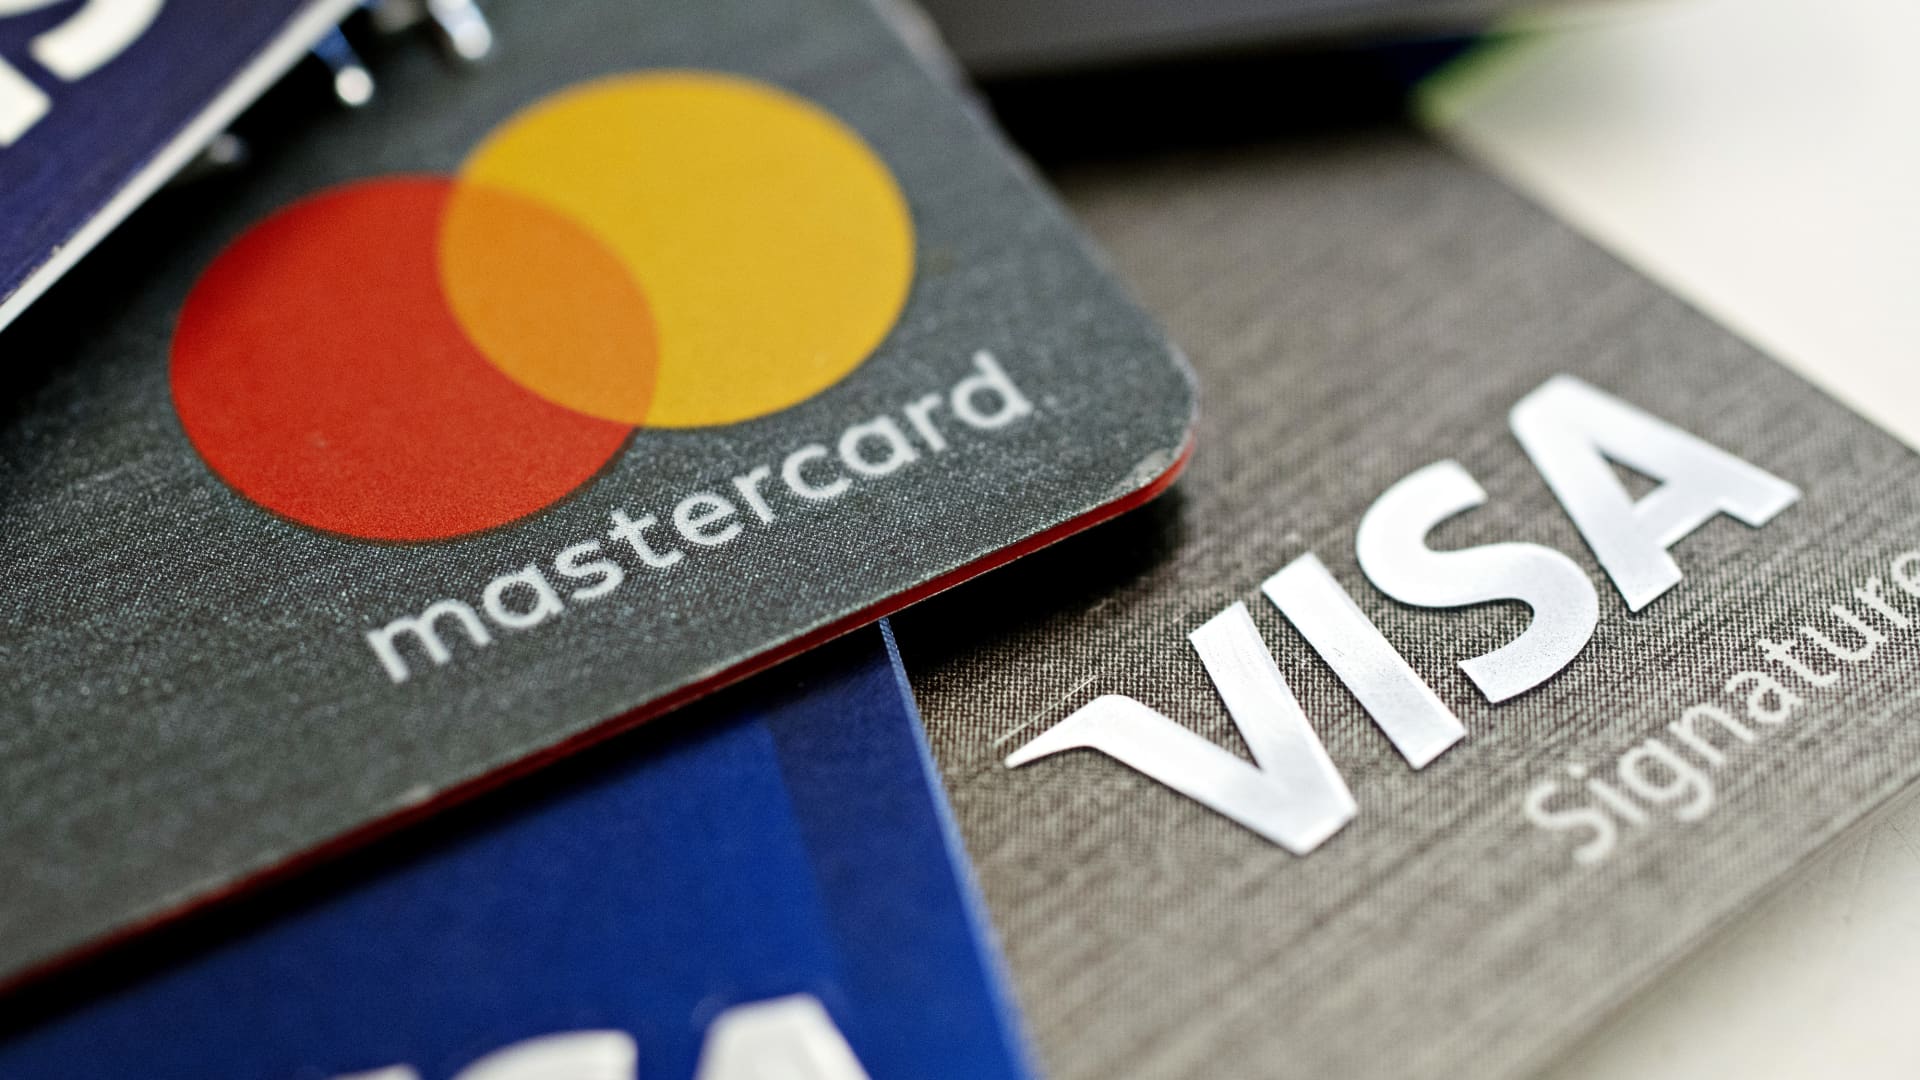 Mastercard, Visa reach $30 billion settlement over credit card fees